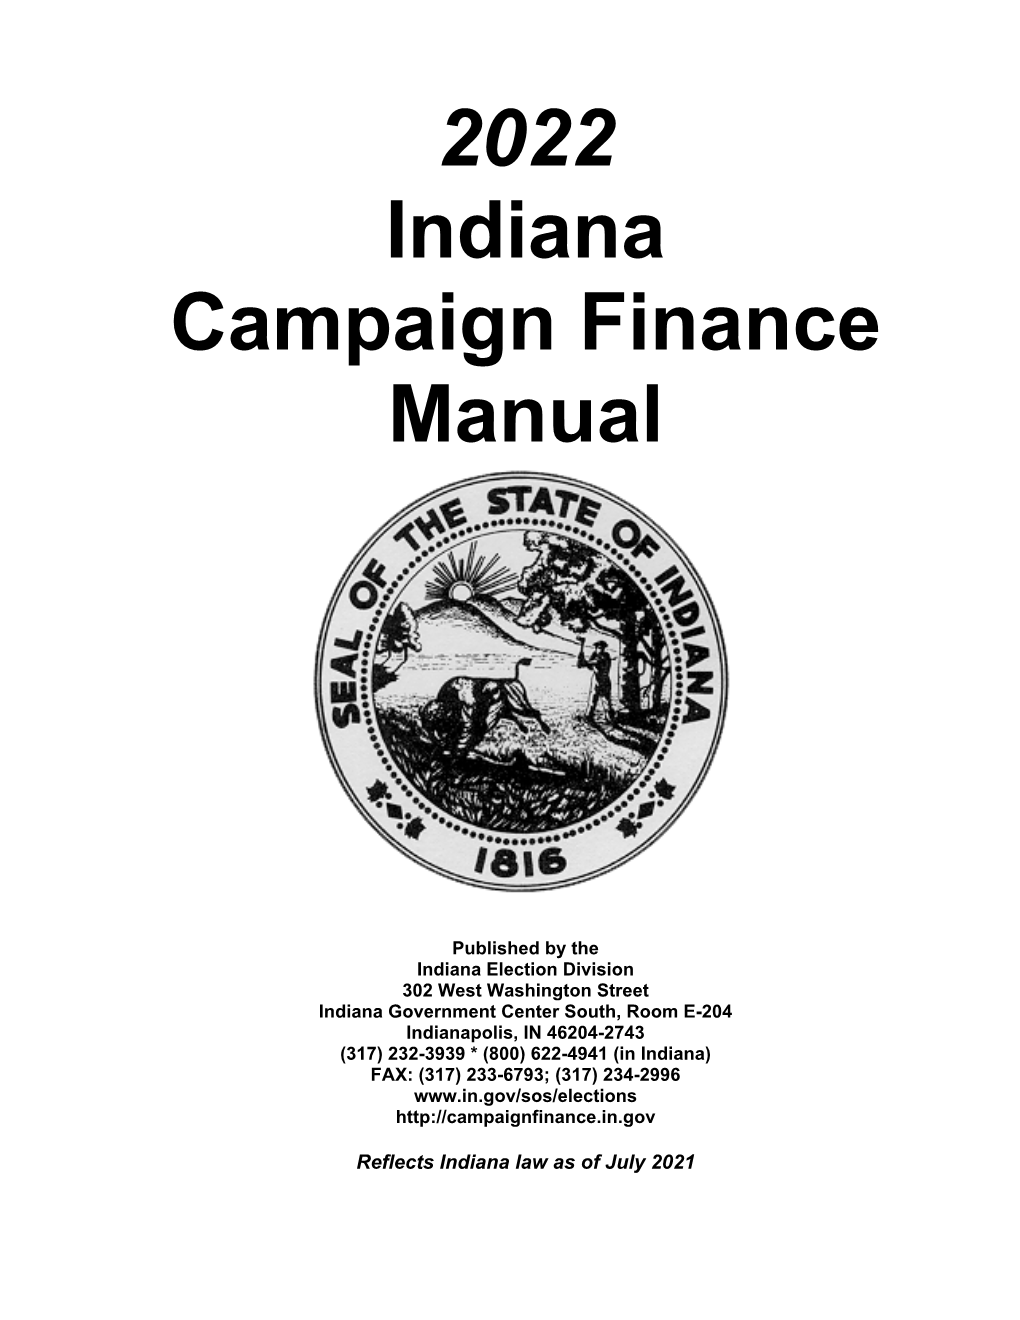 2022 Indiana Campaign Finance Manual